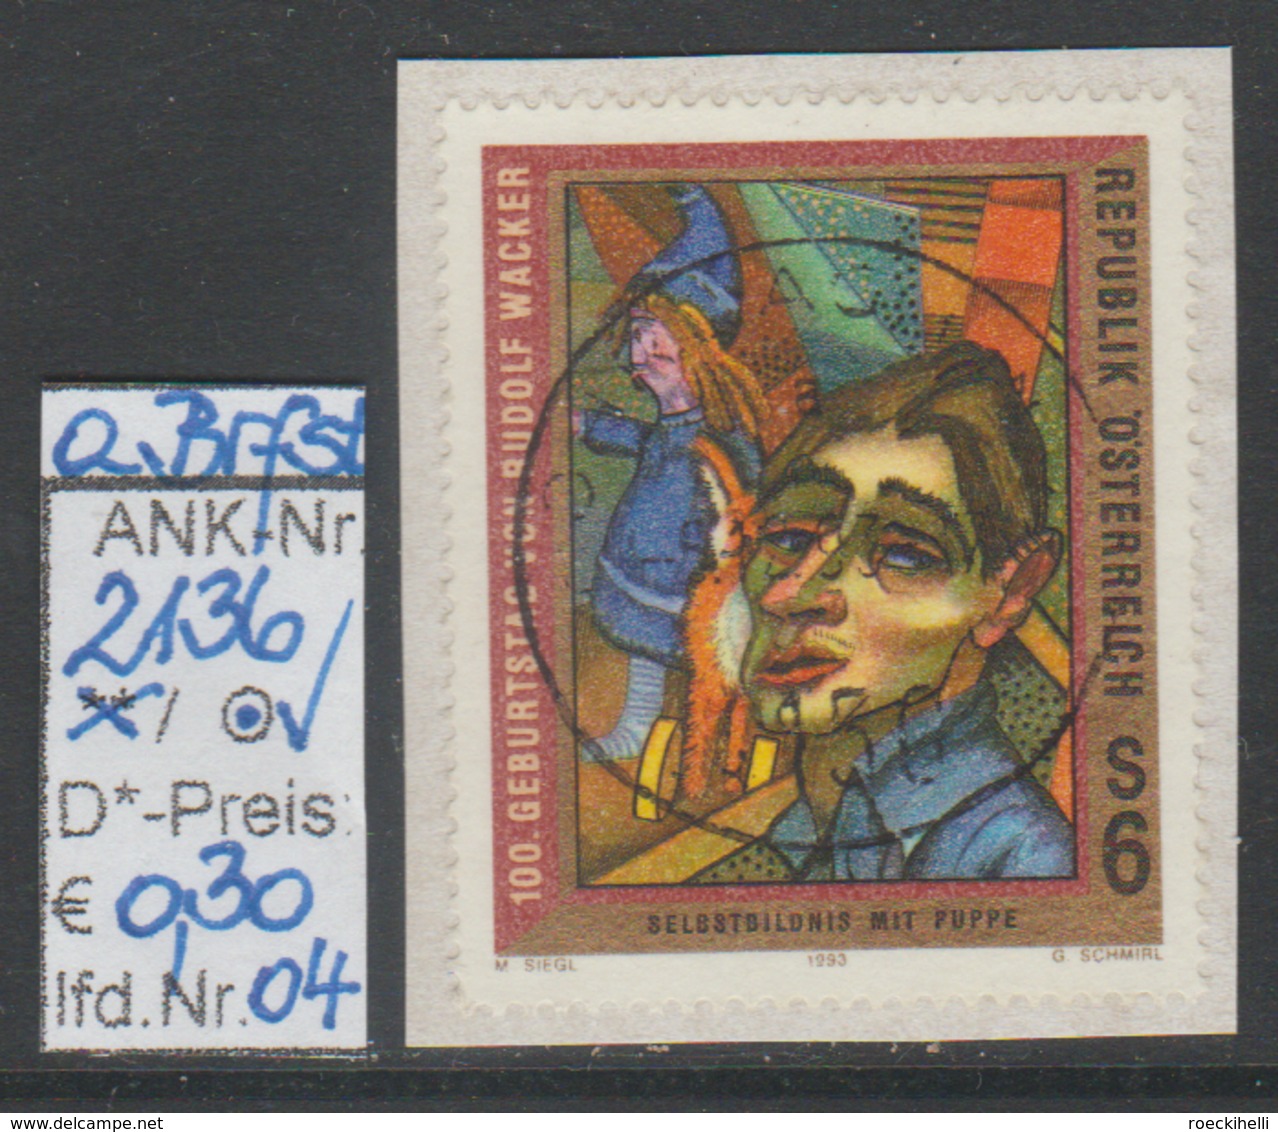 6.8.1993  -  SM "100. Geburtstag Des Malers Rudolf Wacker" -  O  Gestempelt  -  Siehe Scan  (2136o 01-04) - Used Stamps